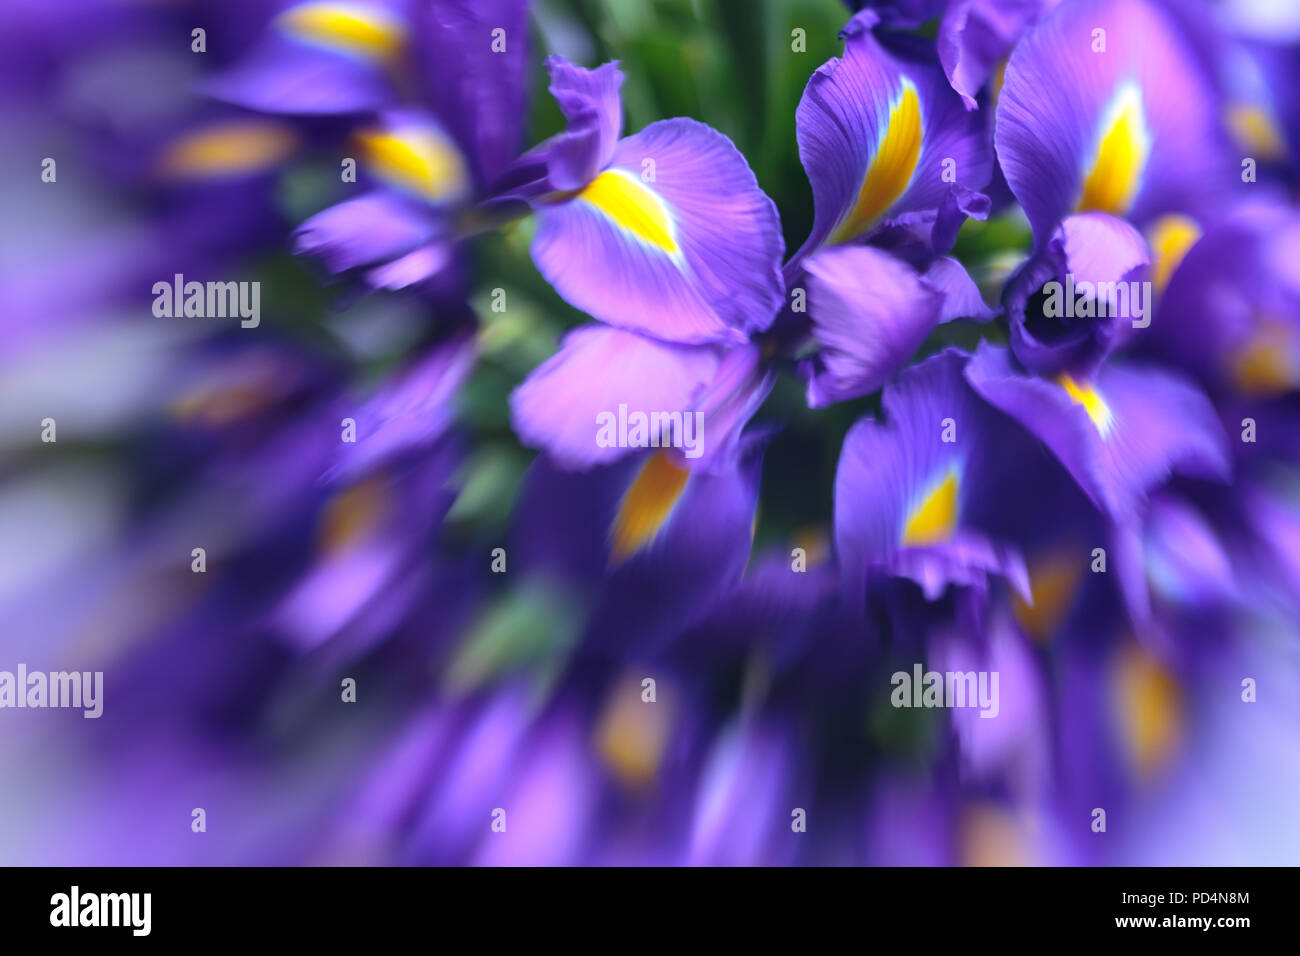 Purple delicate iris flowers background Stock Photo